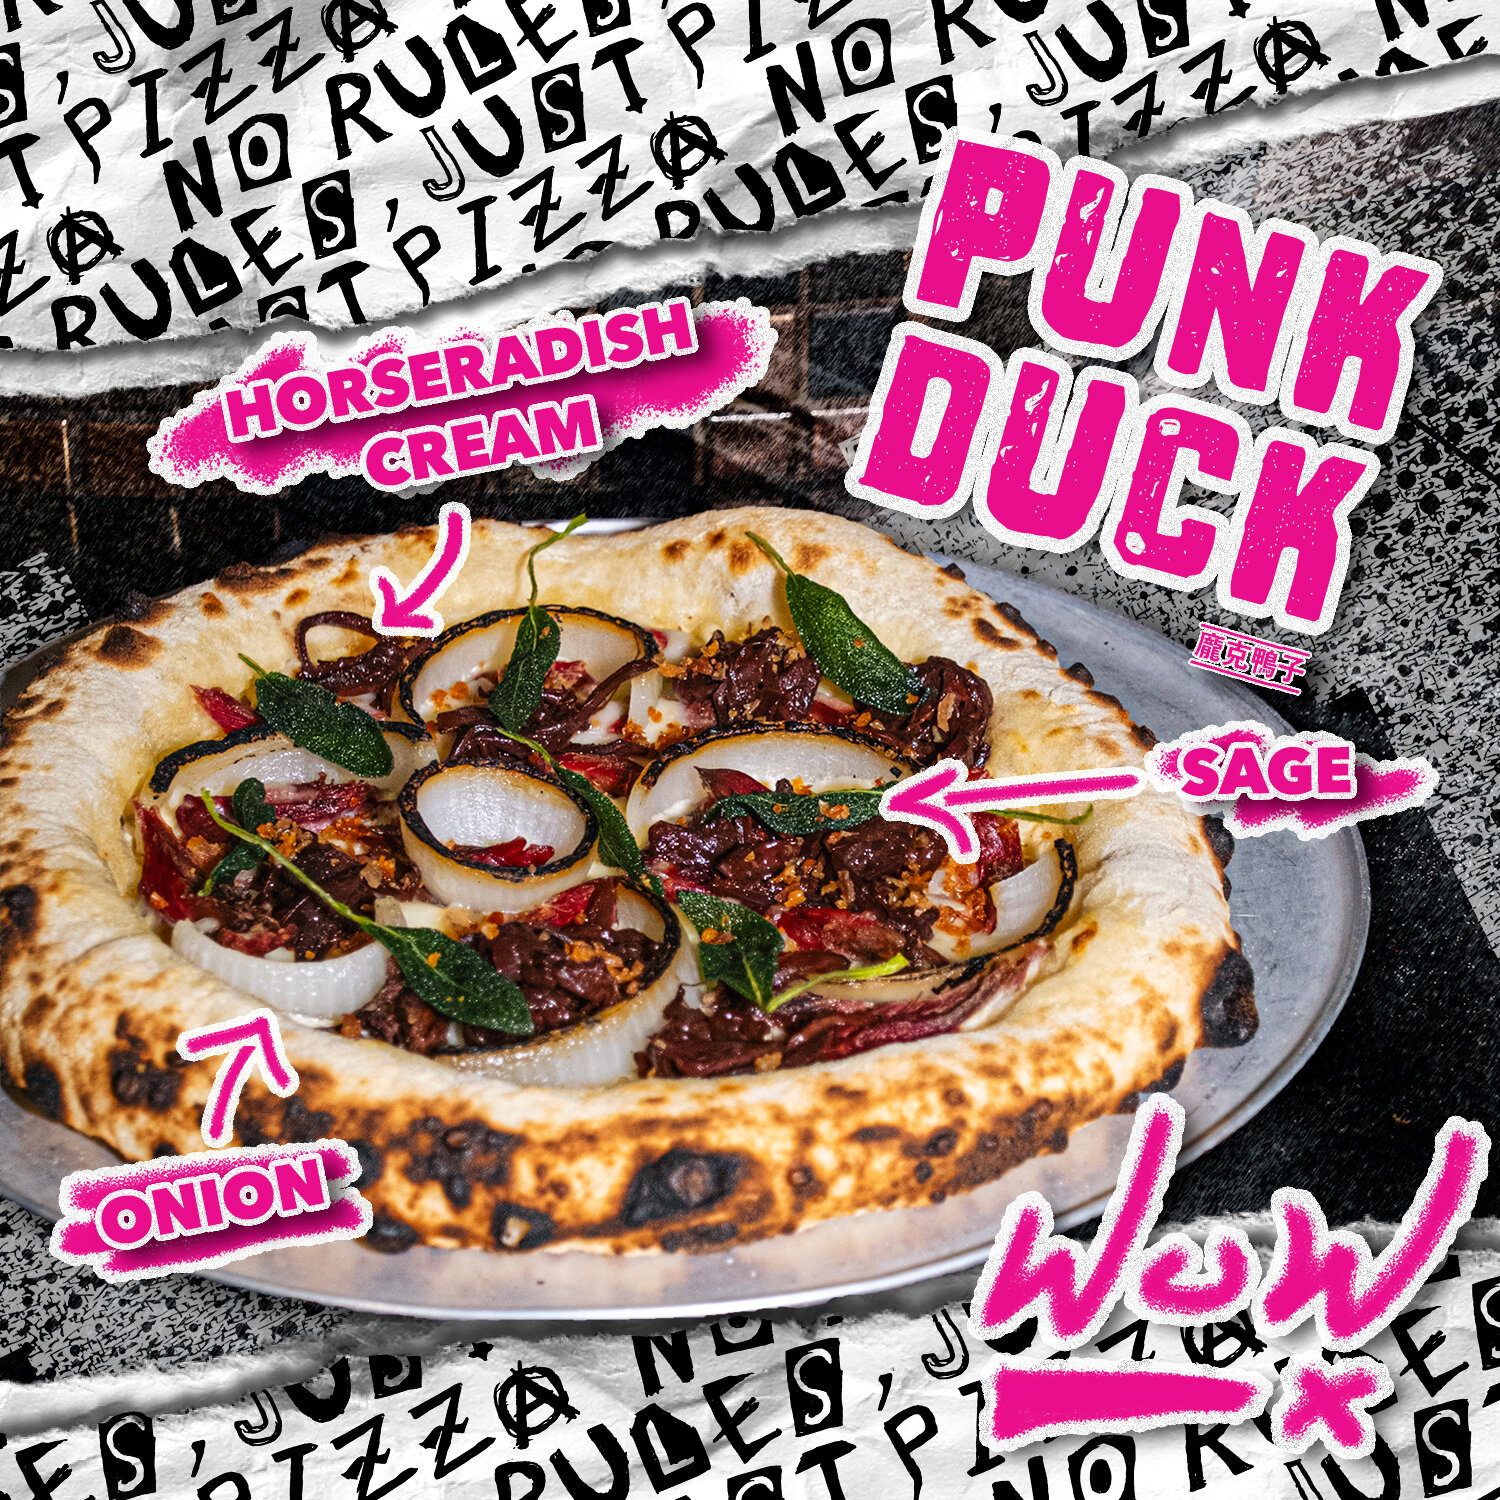 𝗣𝗨𝗡𝗞 𝗗𝗨𝗖𝗞
⚡ Horseradish Cream, Onion, Sage

Delivery and Random Pop-up Only.
Order at Foodpanda: https://www.foodpanda.hk/restaurant/ofaz/pizza-punk
.
.
.
.
.
#pizza #sourdough  #pizzalover #50toppizza #punk #punkrock #hkfood #hkfoodie #hkfoo